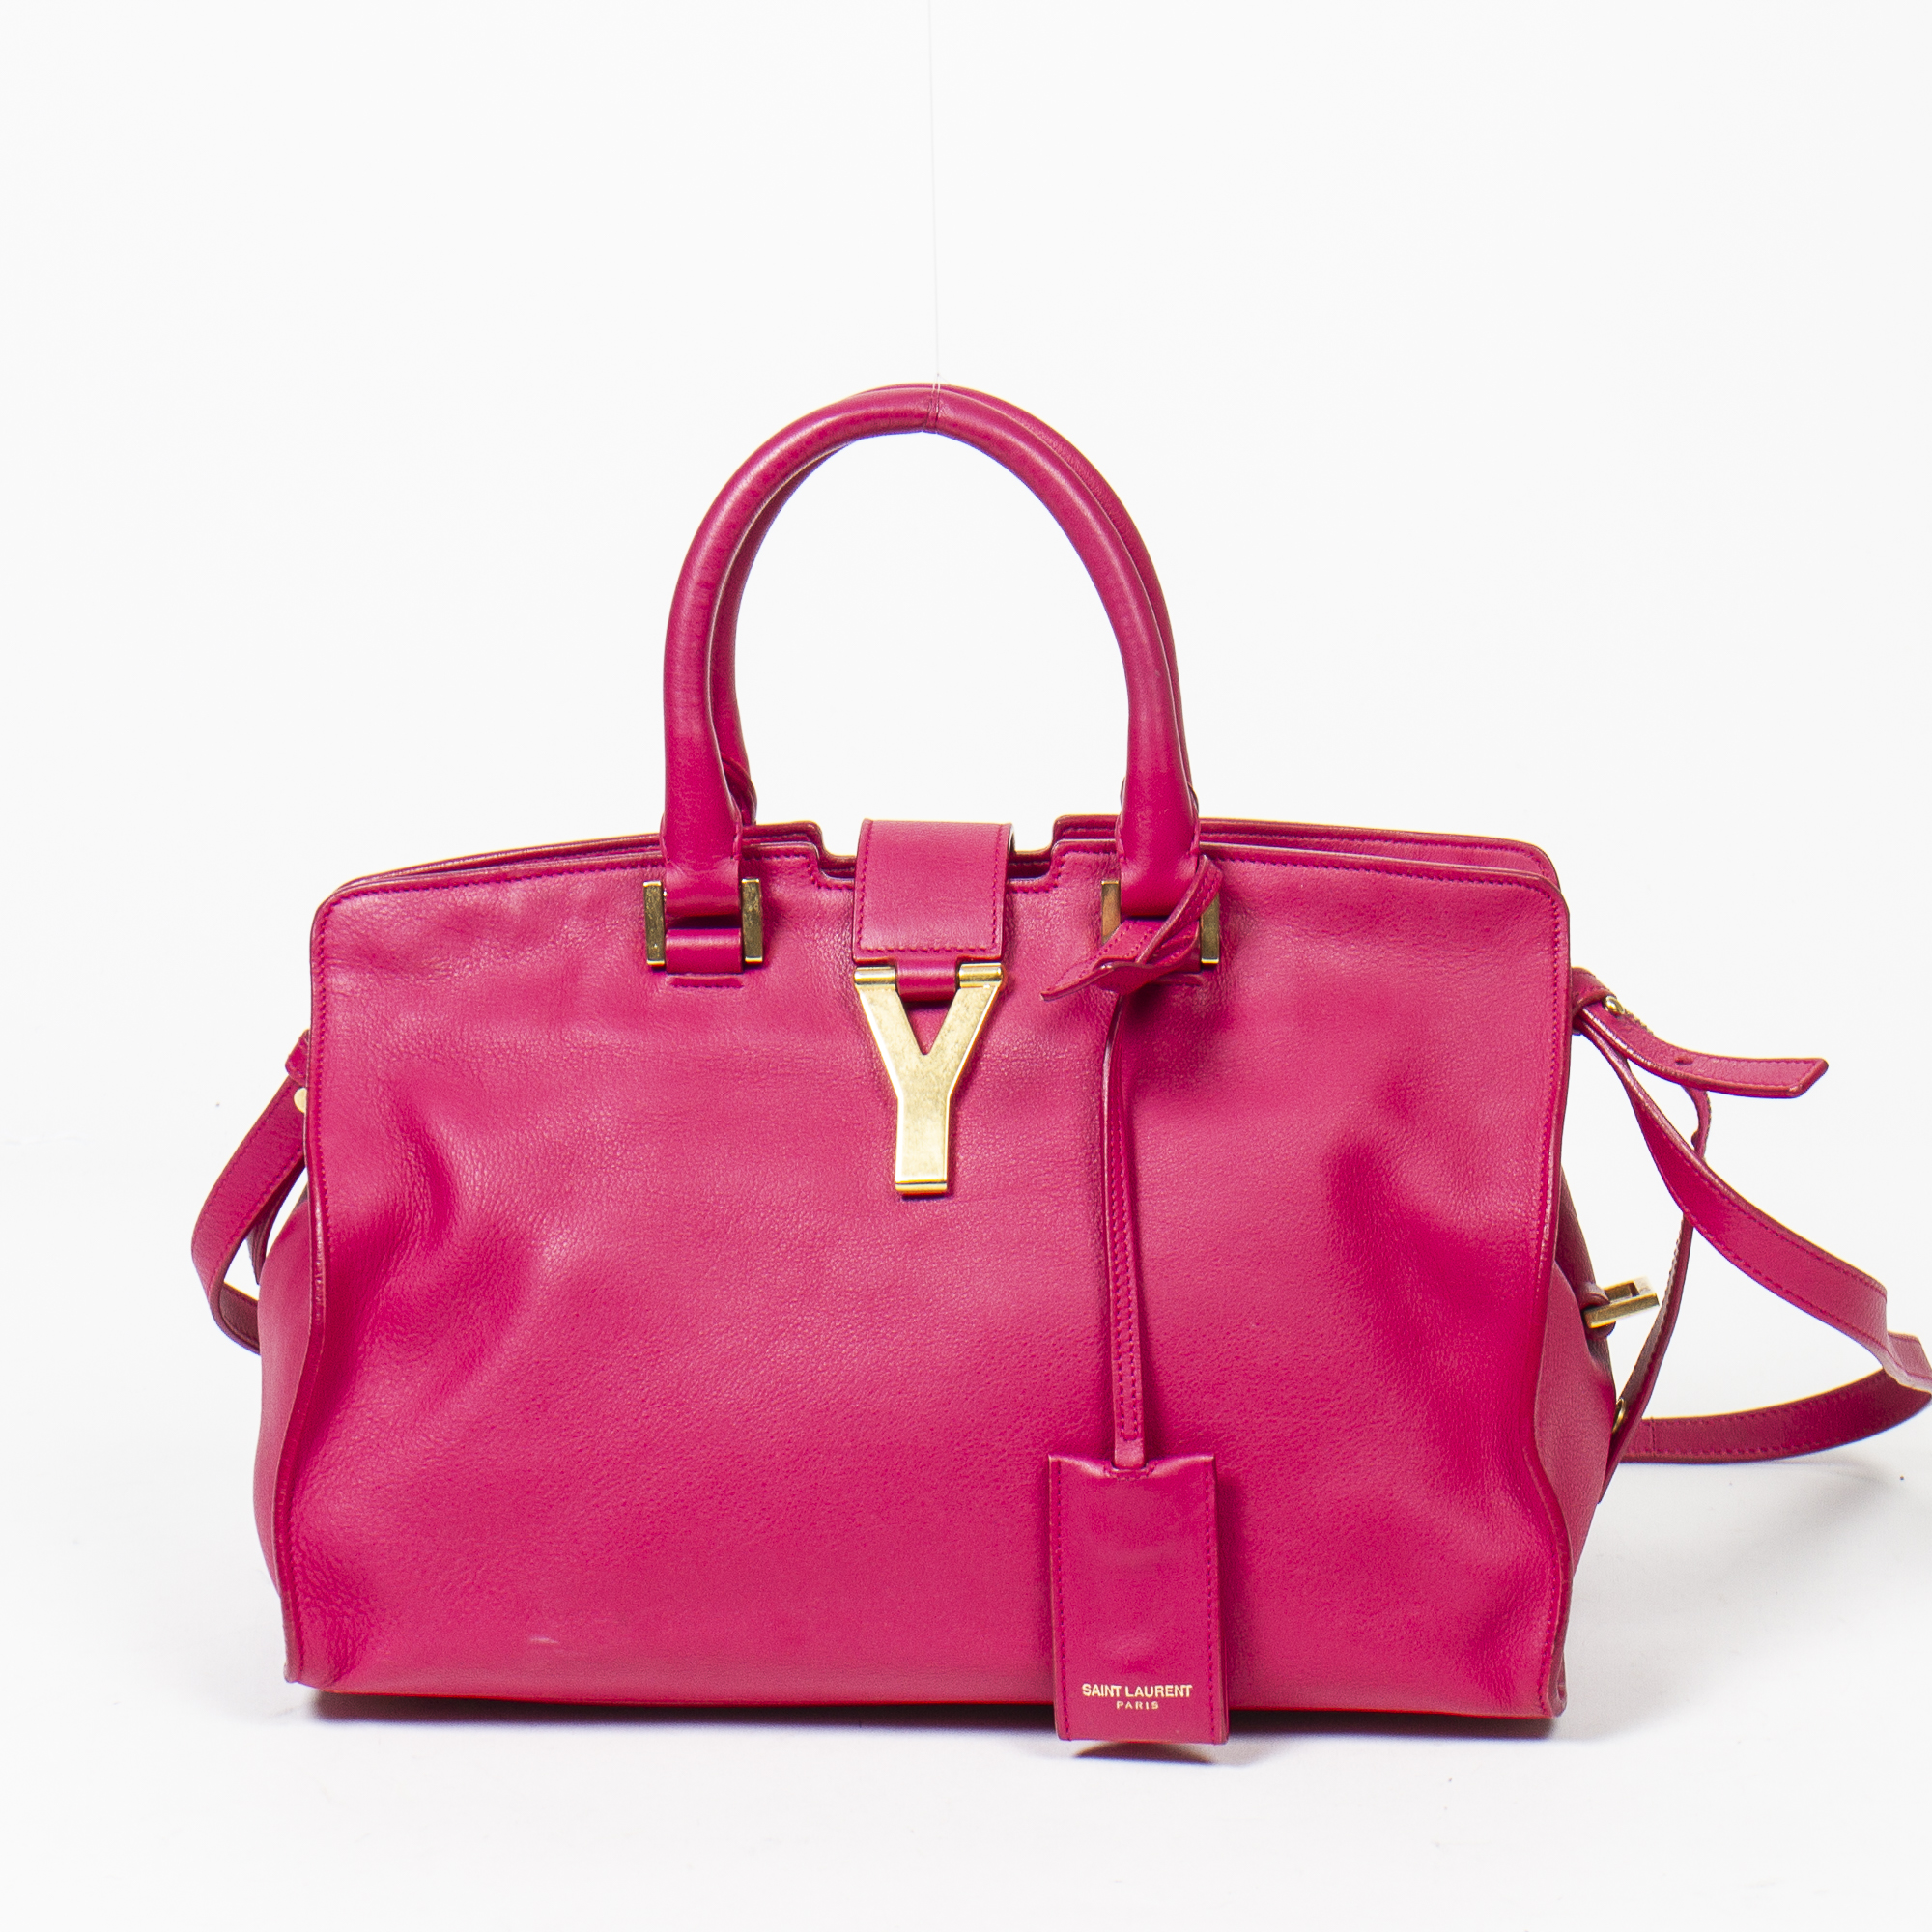 Luxury handbags go on the auction block